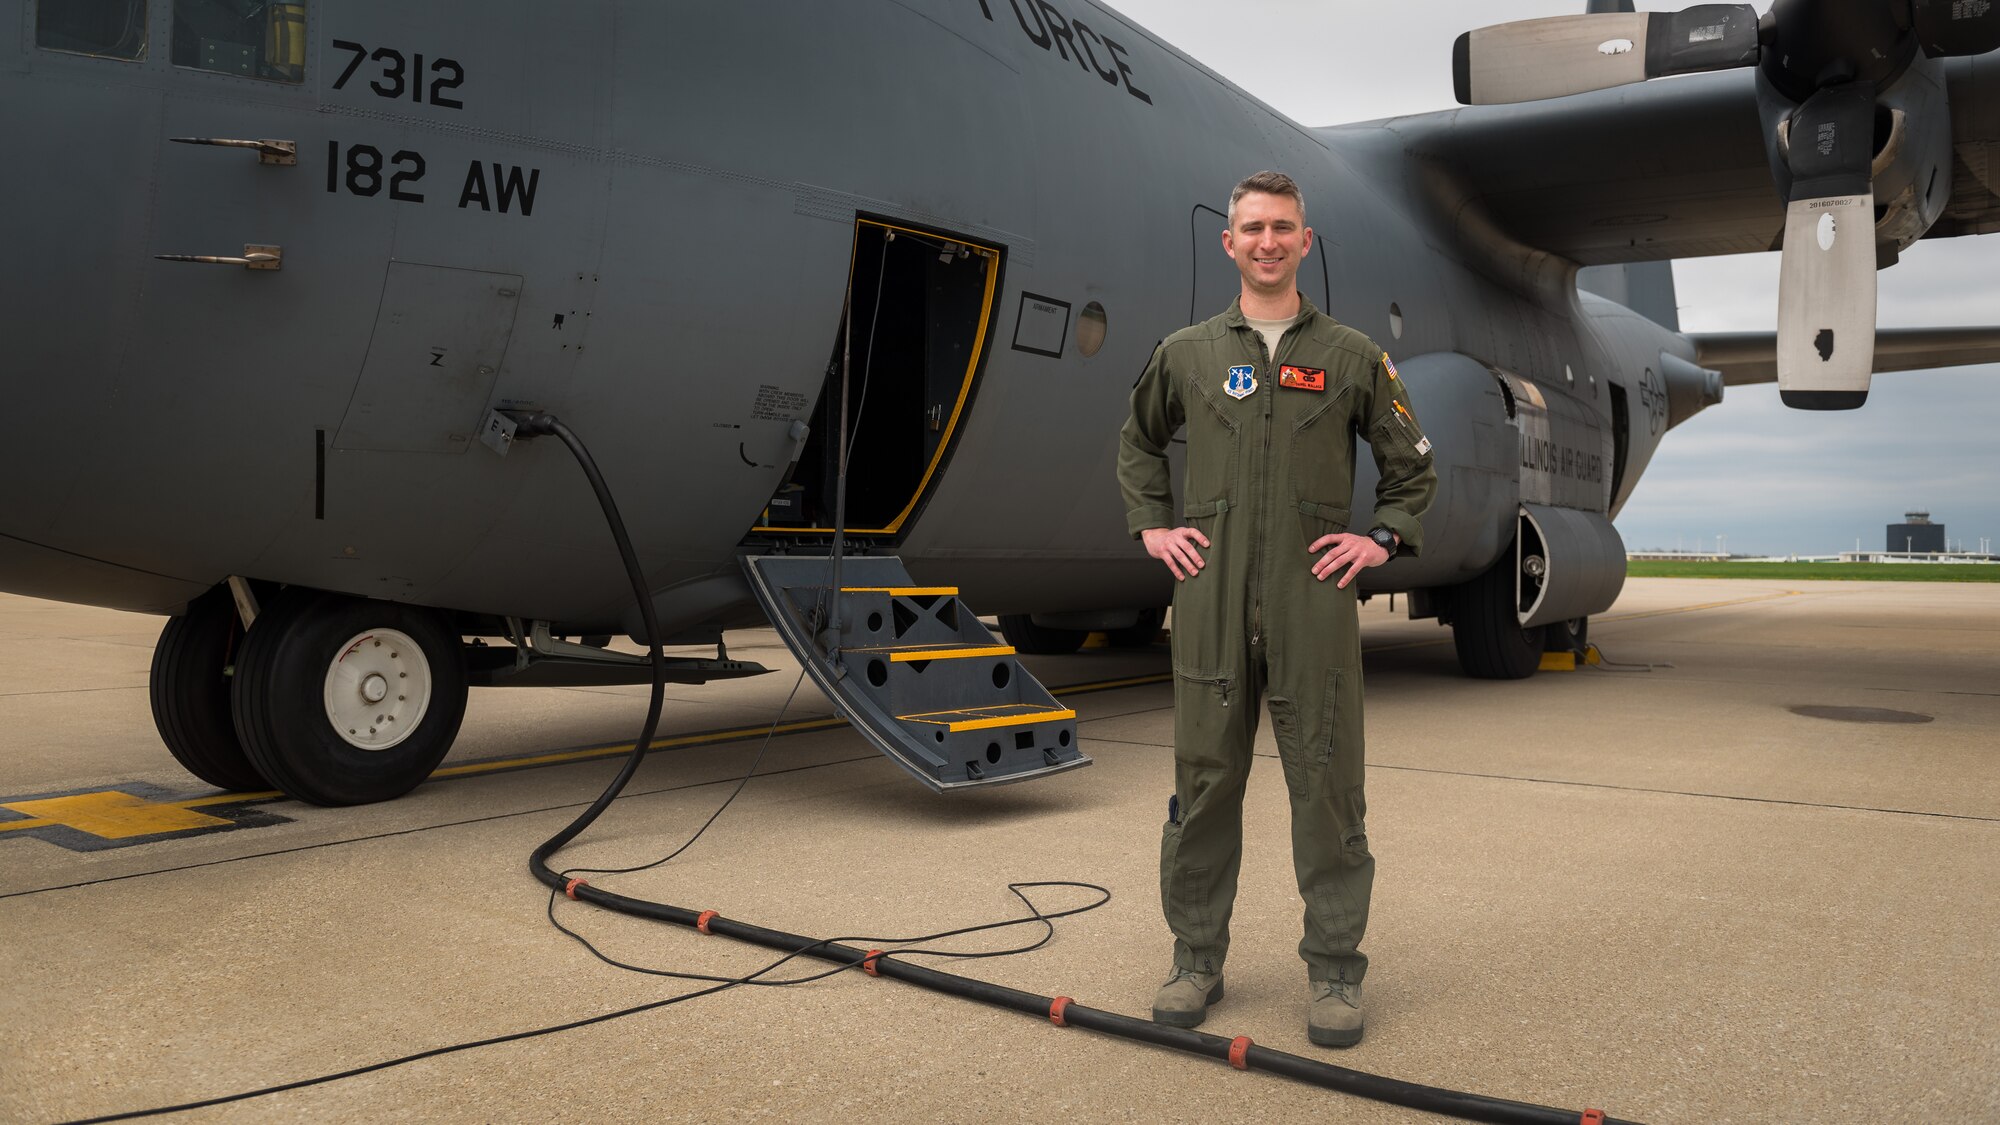 Airman posing with aircraft.